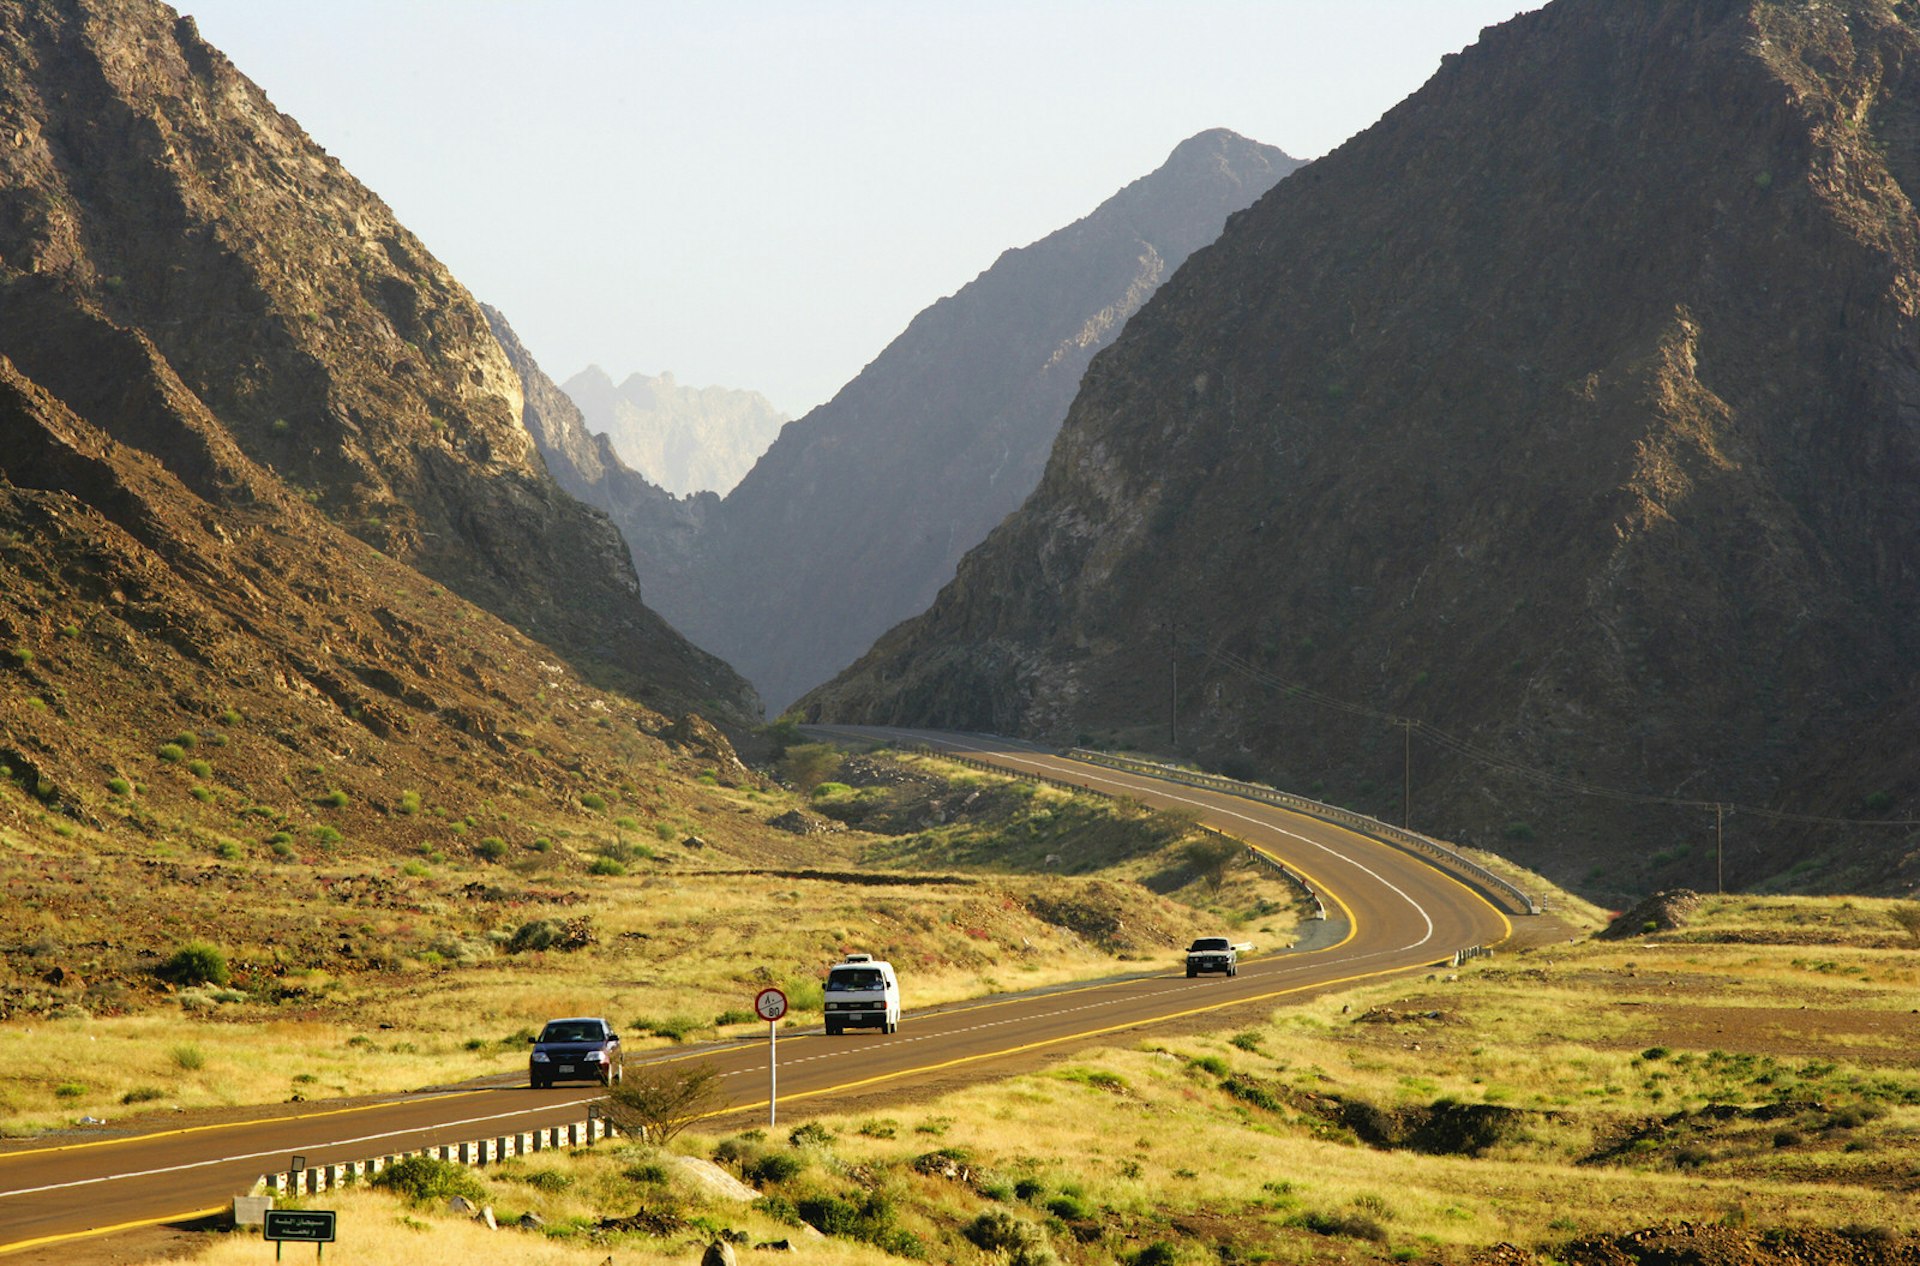 Scenic mountain road between Masafi and Dibba, Fujairah, United Arab Emirates © David Steele / Getty Images